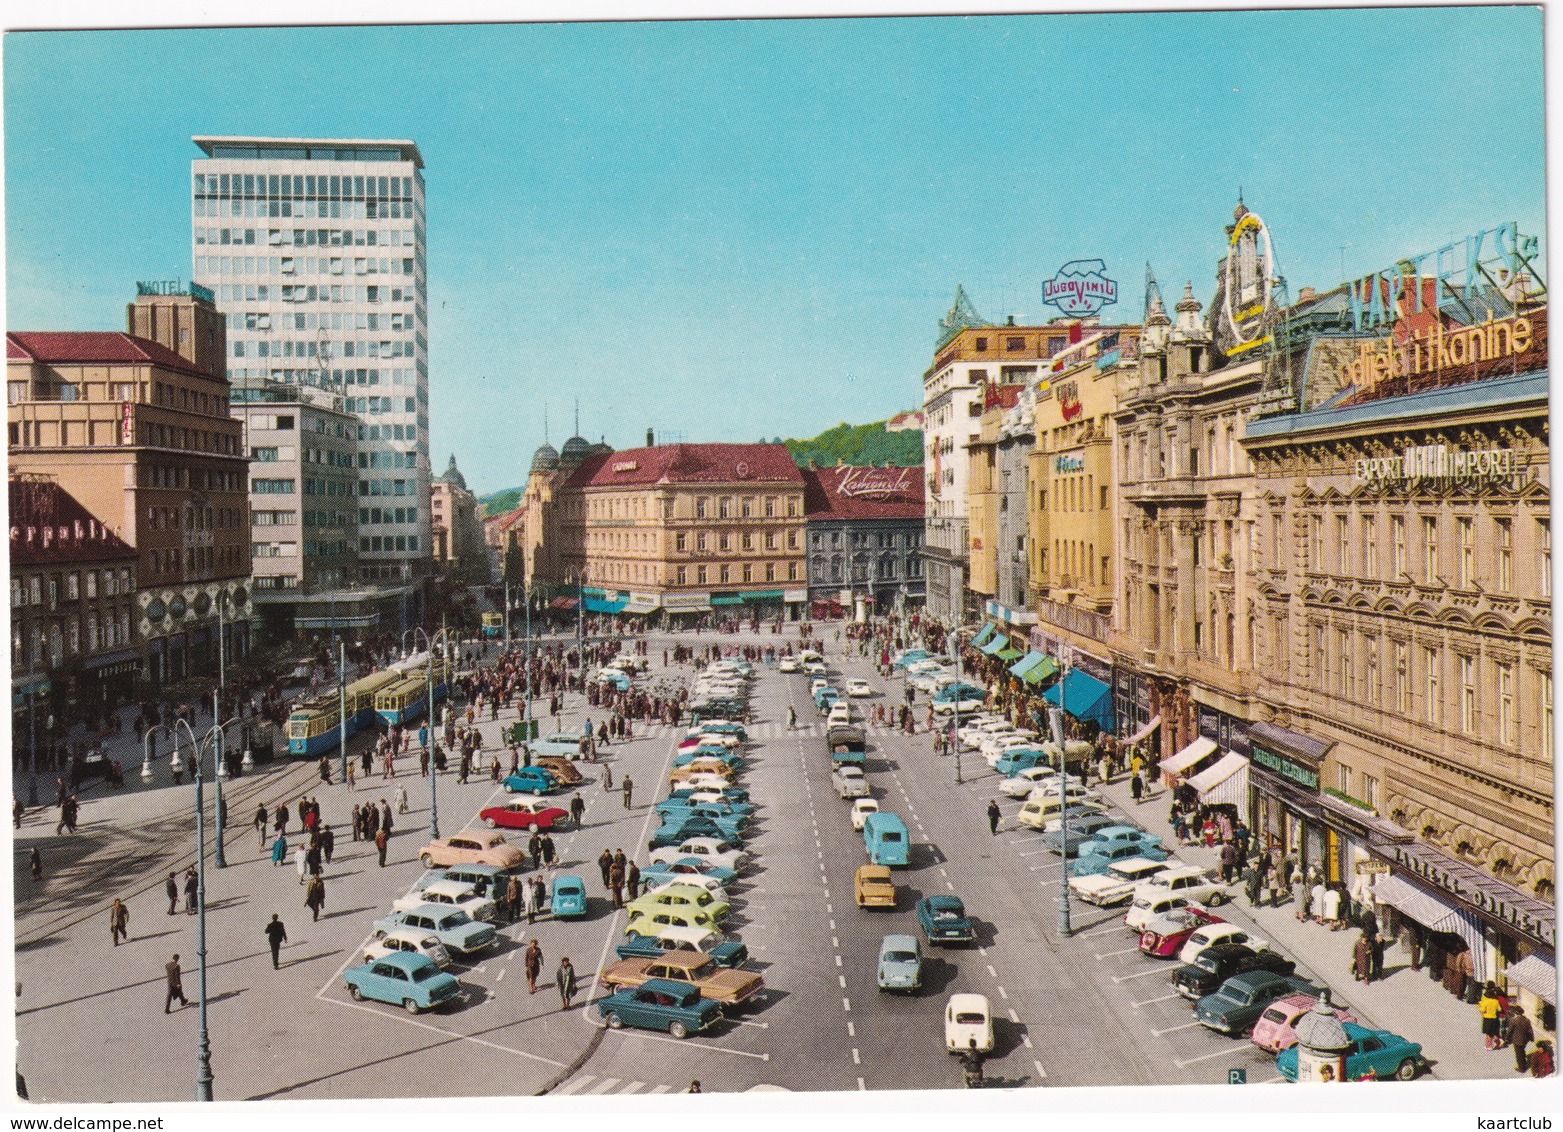 Zagreb: FORD 15M P1, ANGLIA, CHEVROLET IMPALA, OPEL OLYMPIA REKORD, MG ROADSTER, PONTIAC CATALINA '59, DKW JUNIOR, TRAM - Toerisme